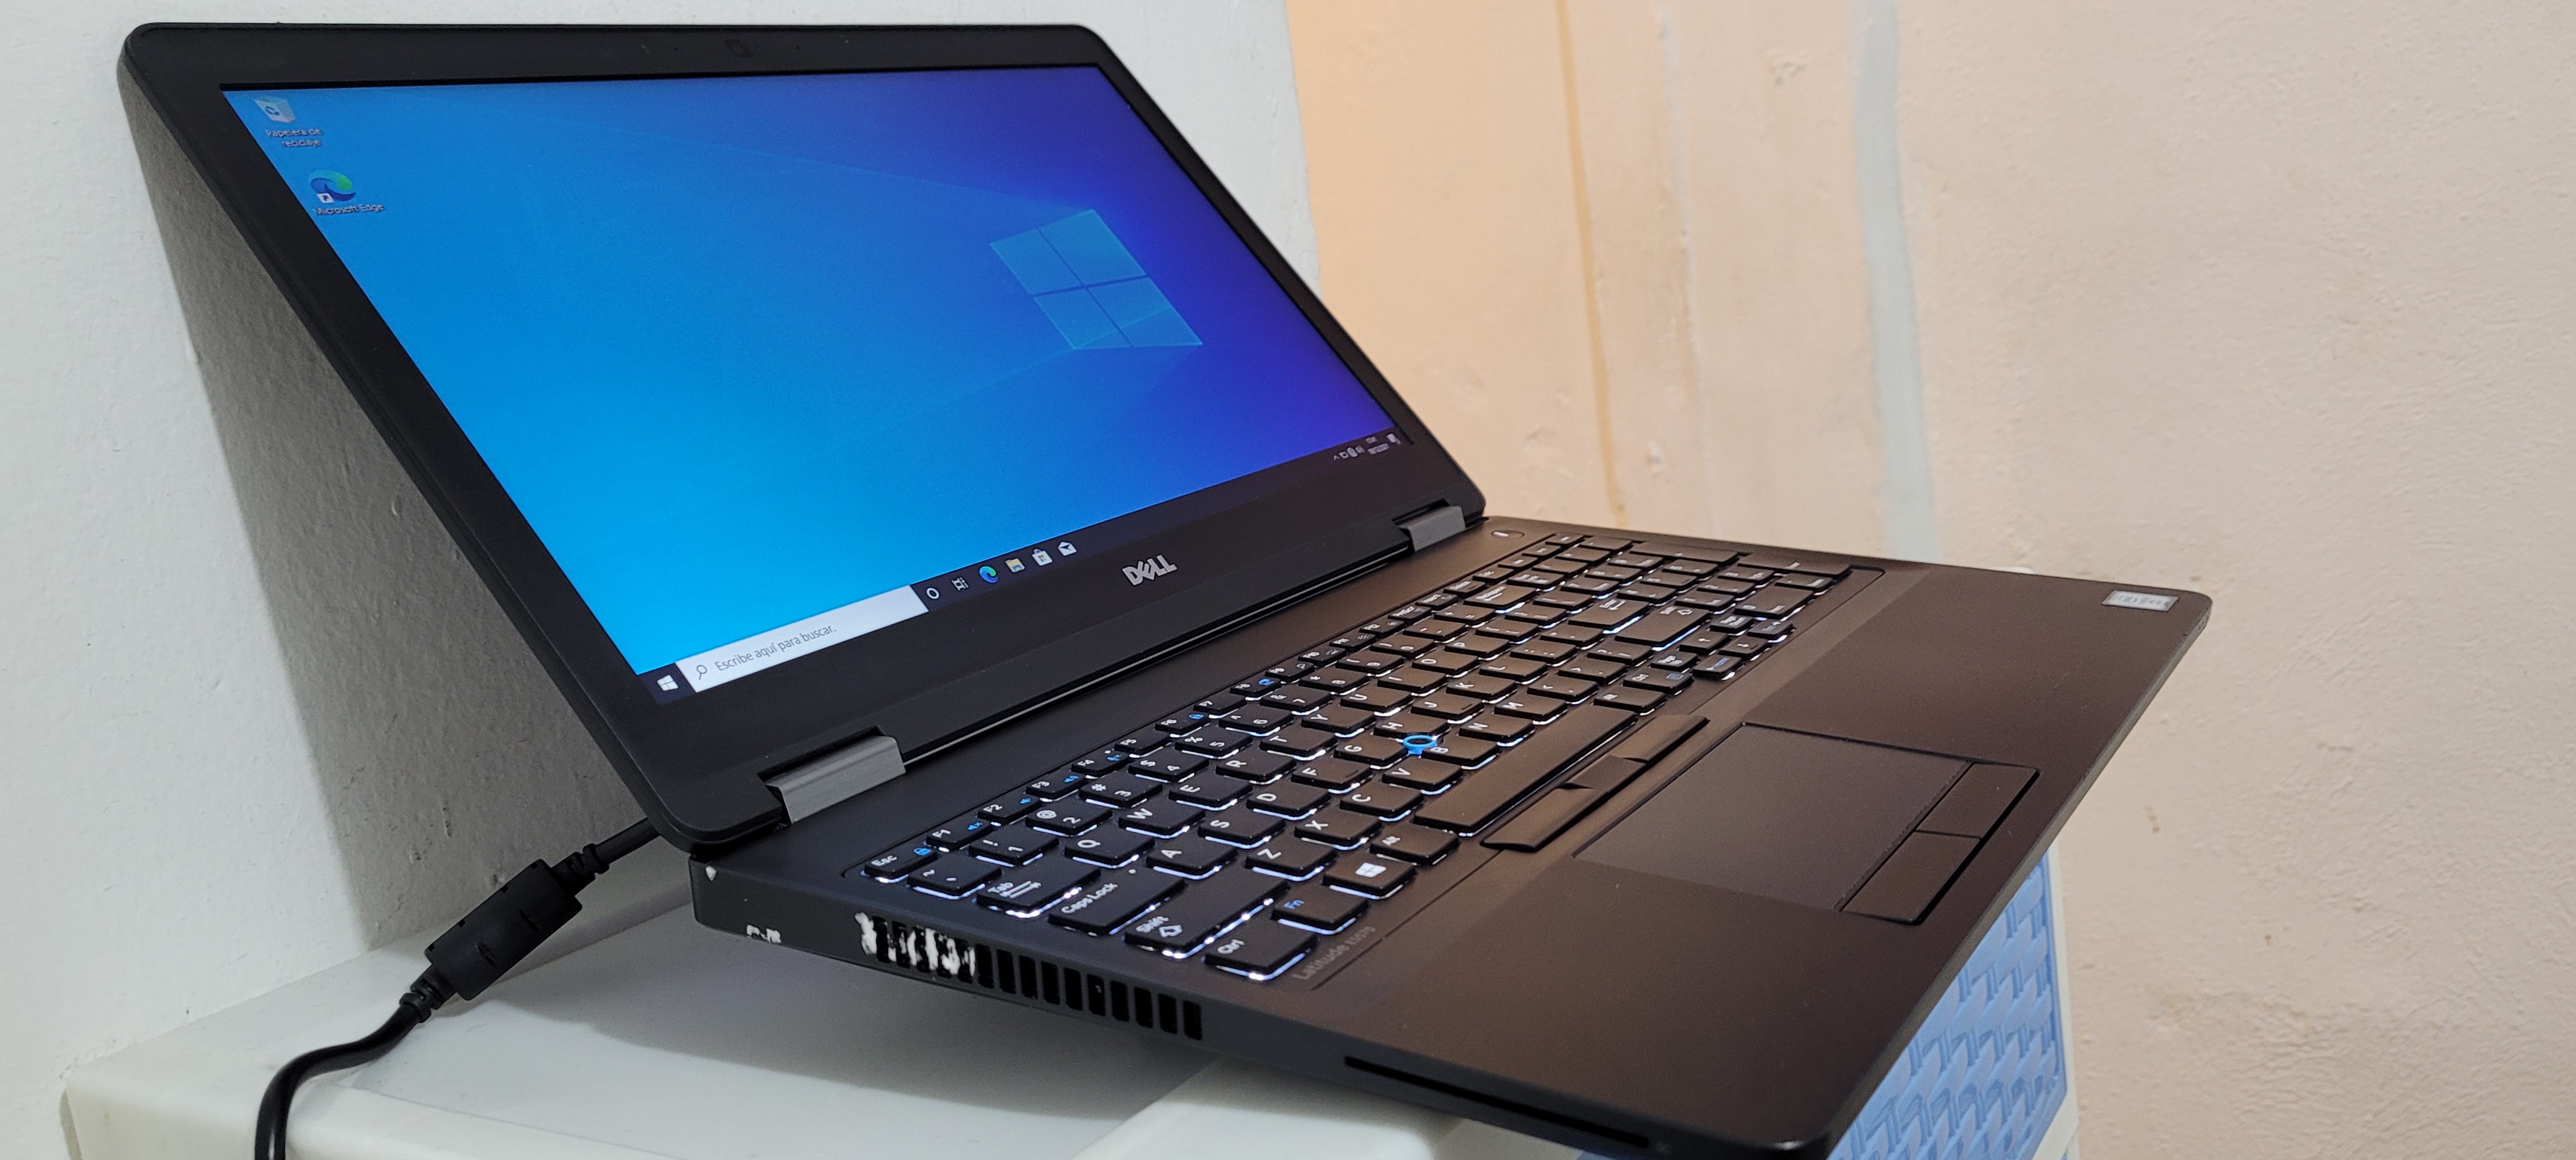 computadoras y laptops - Dell 5570 17 Pulg Core i7 6ta Ram 16gb Disco 256gb SSD Video 8gb Aty R7 2gb 1